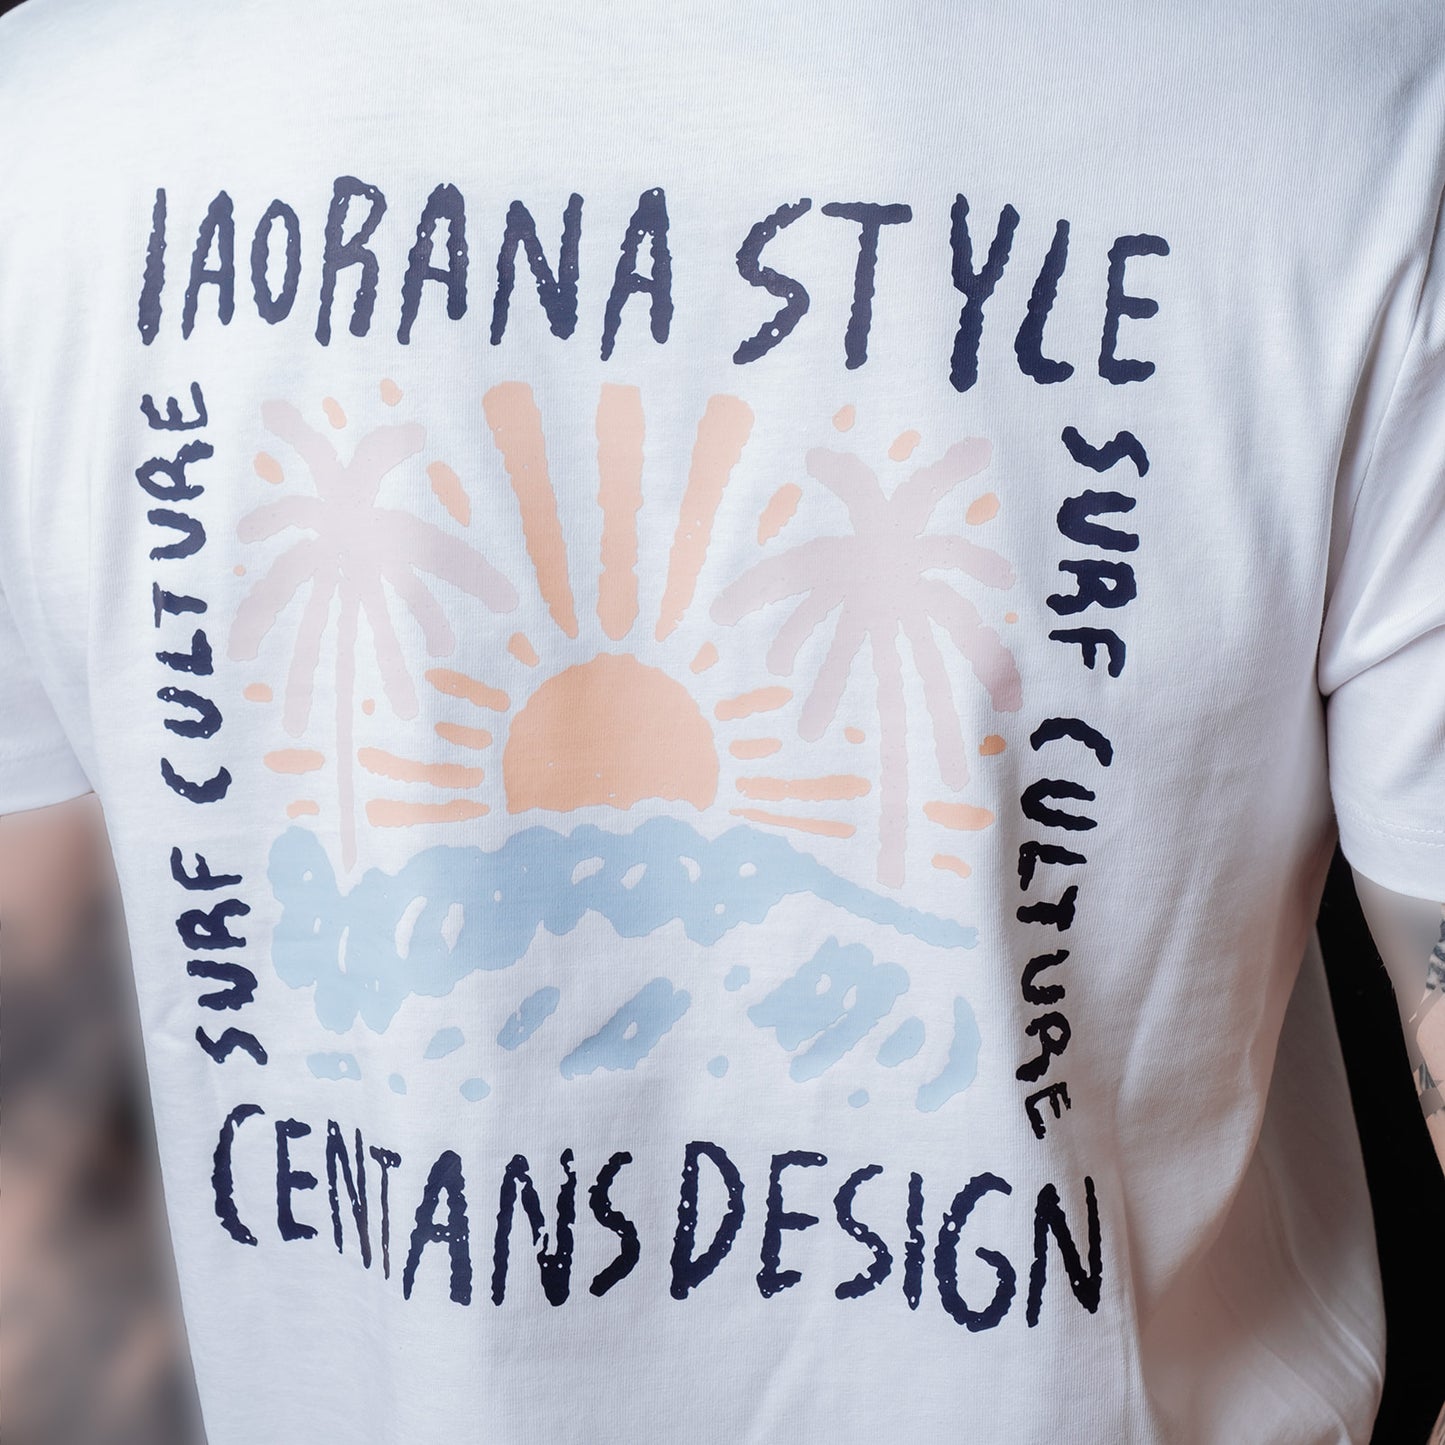 T-Shirt Opérateur - Iaorana